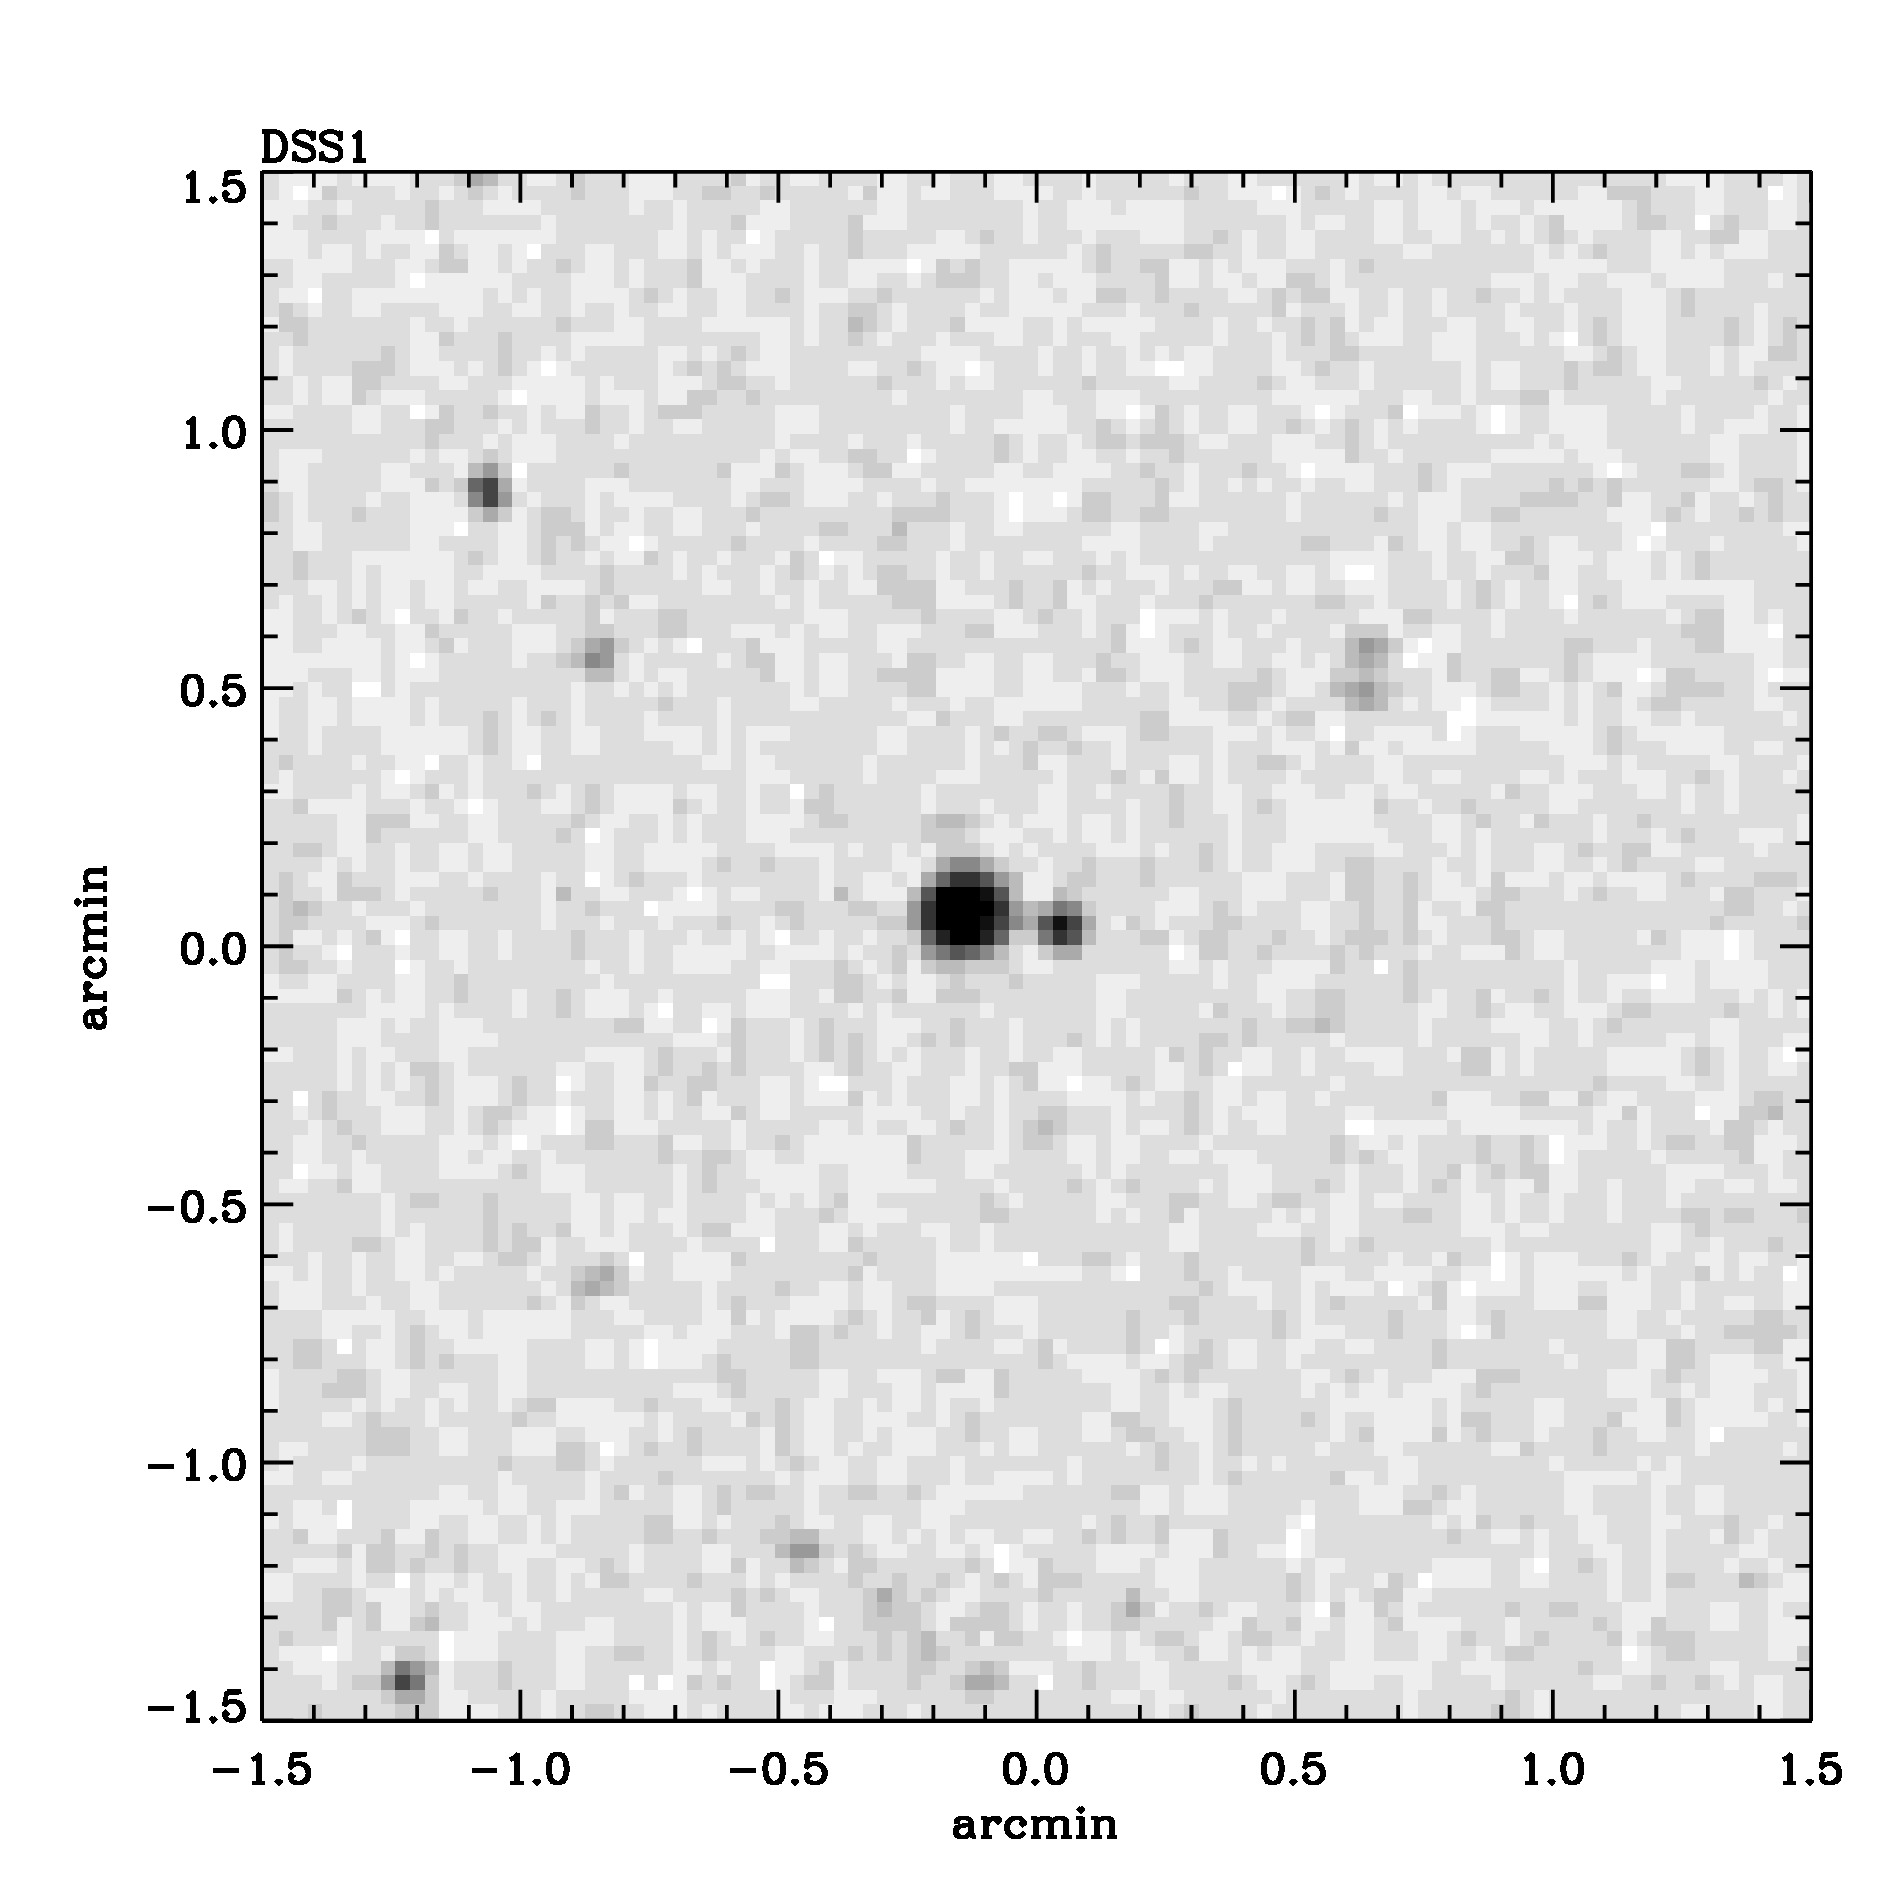 Optical image for SWIFT J1347.1+7325